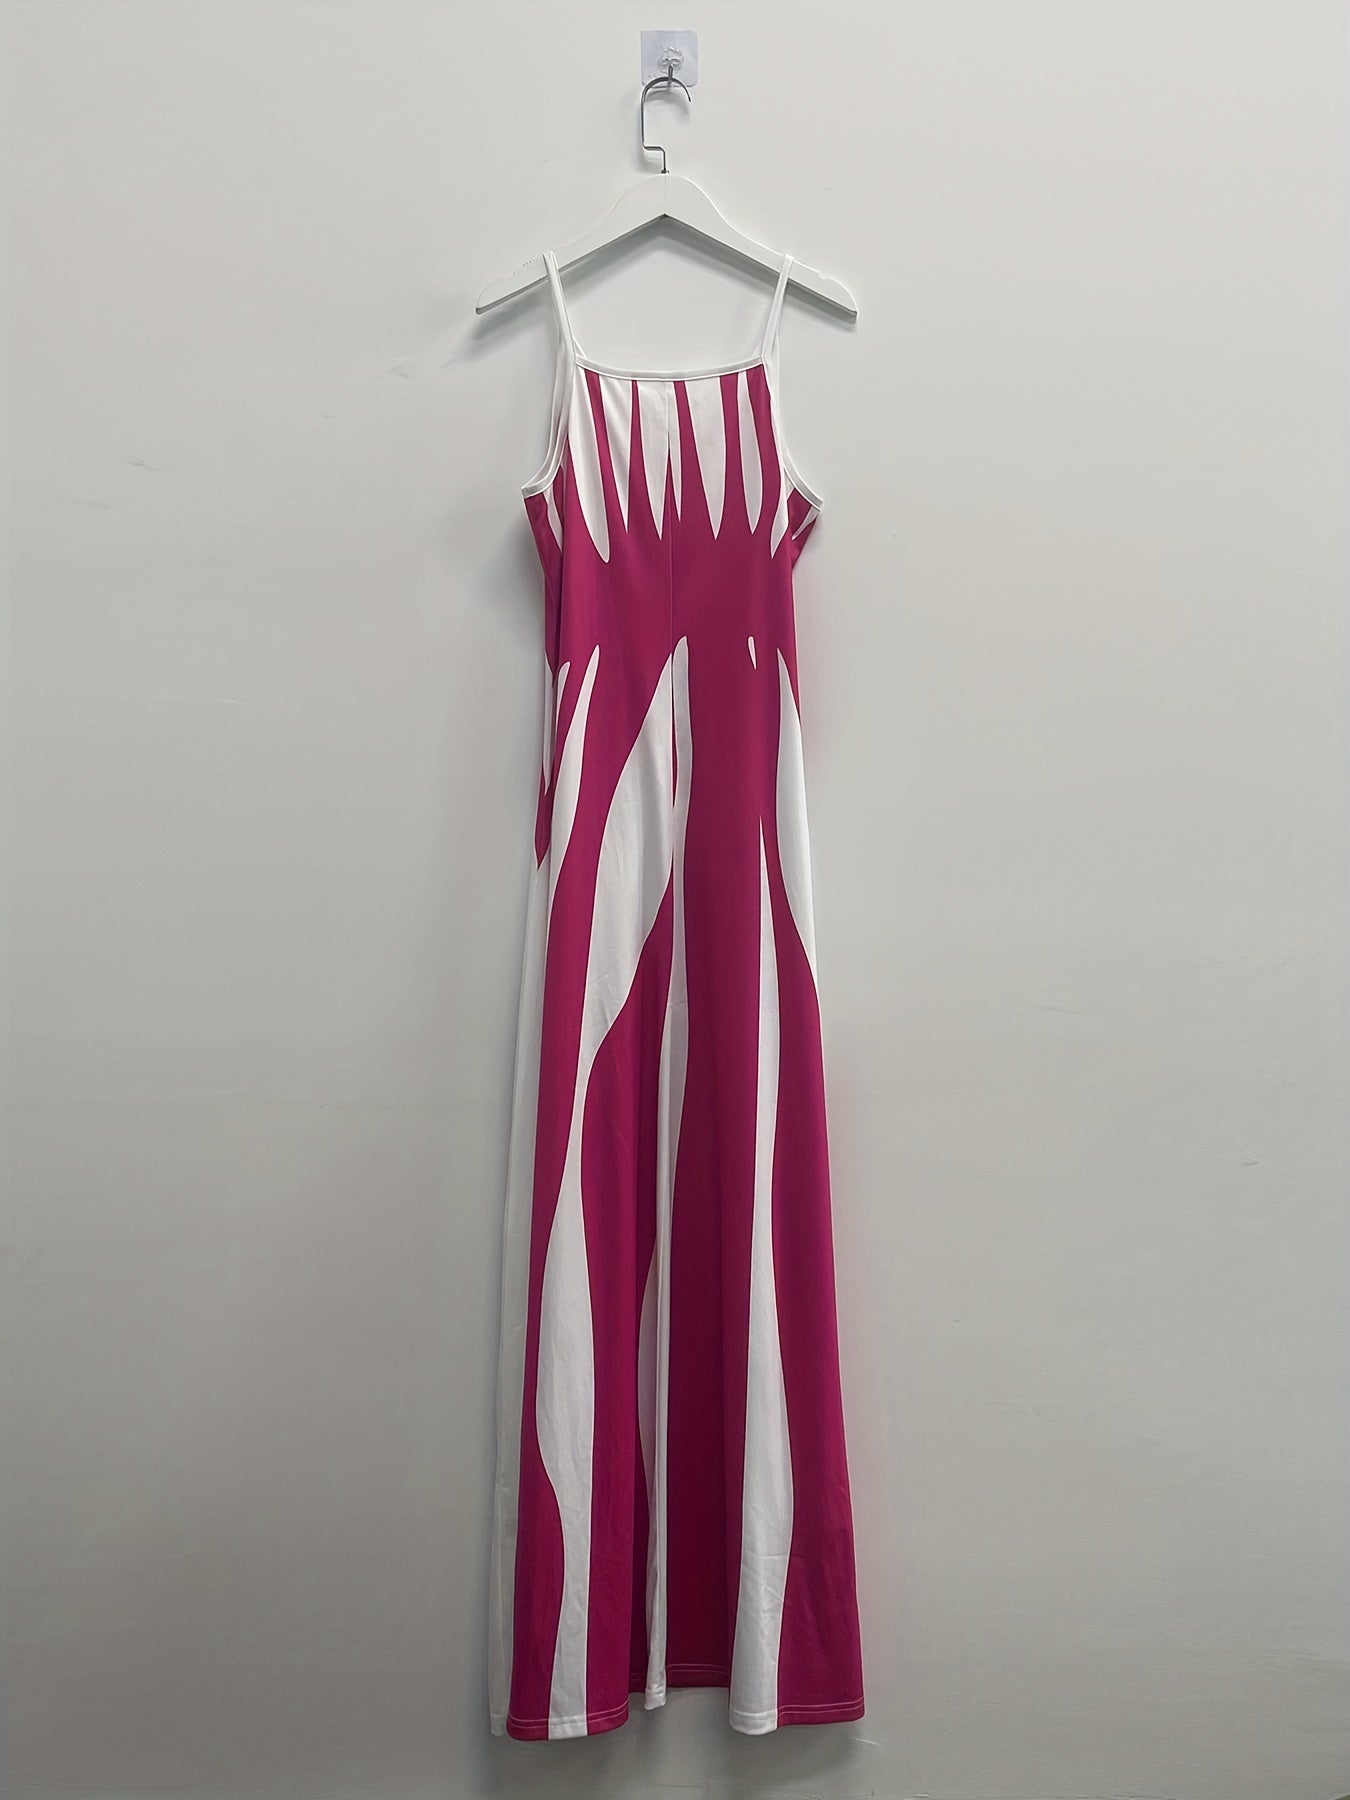 Abstract Print Maxi Dress, Casual Sleeveless Spaghetti Strap Dress, Women's Clothing